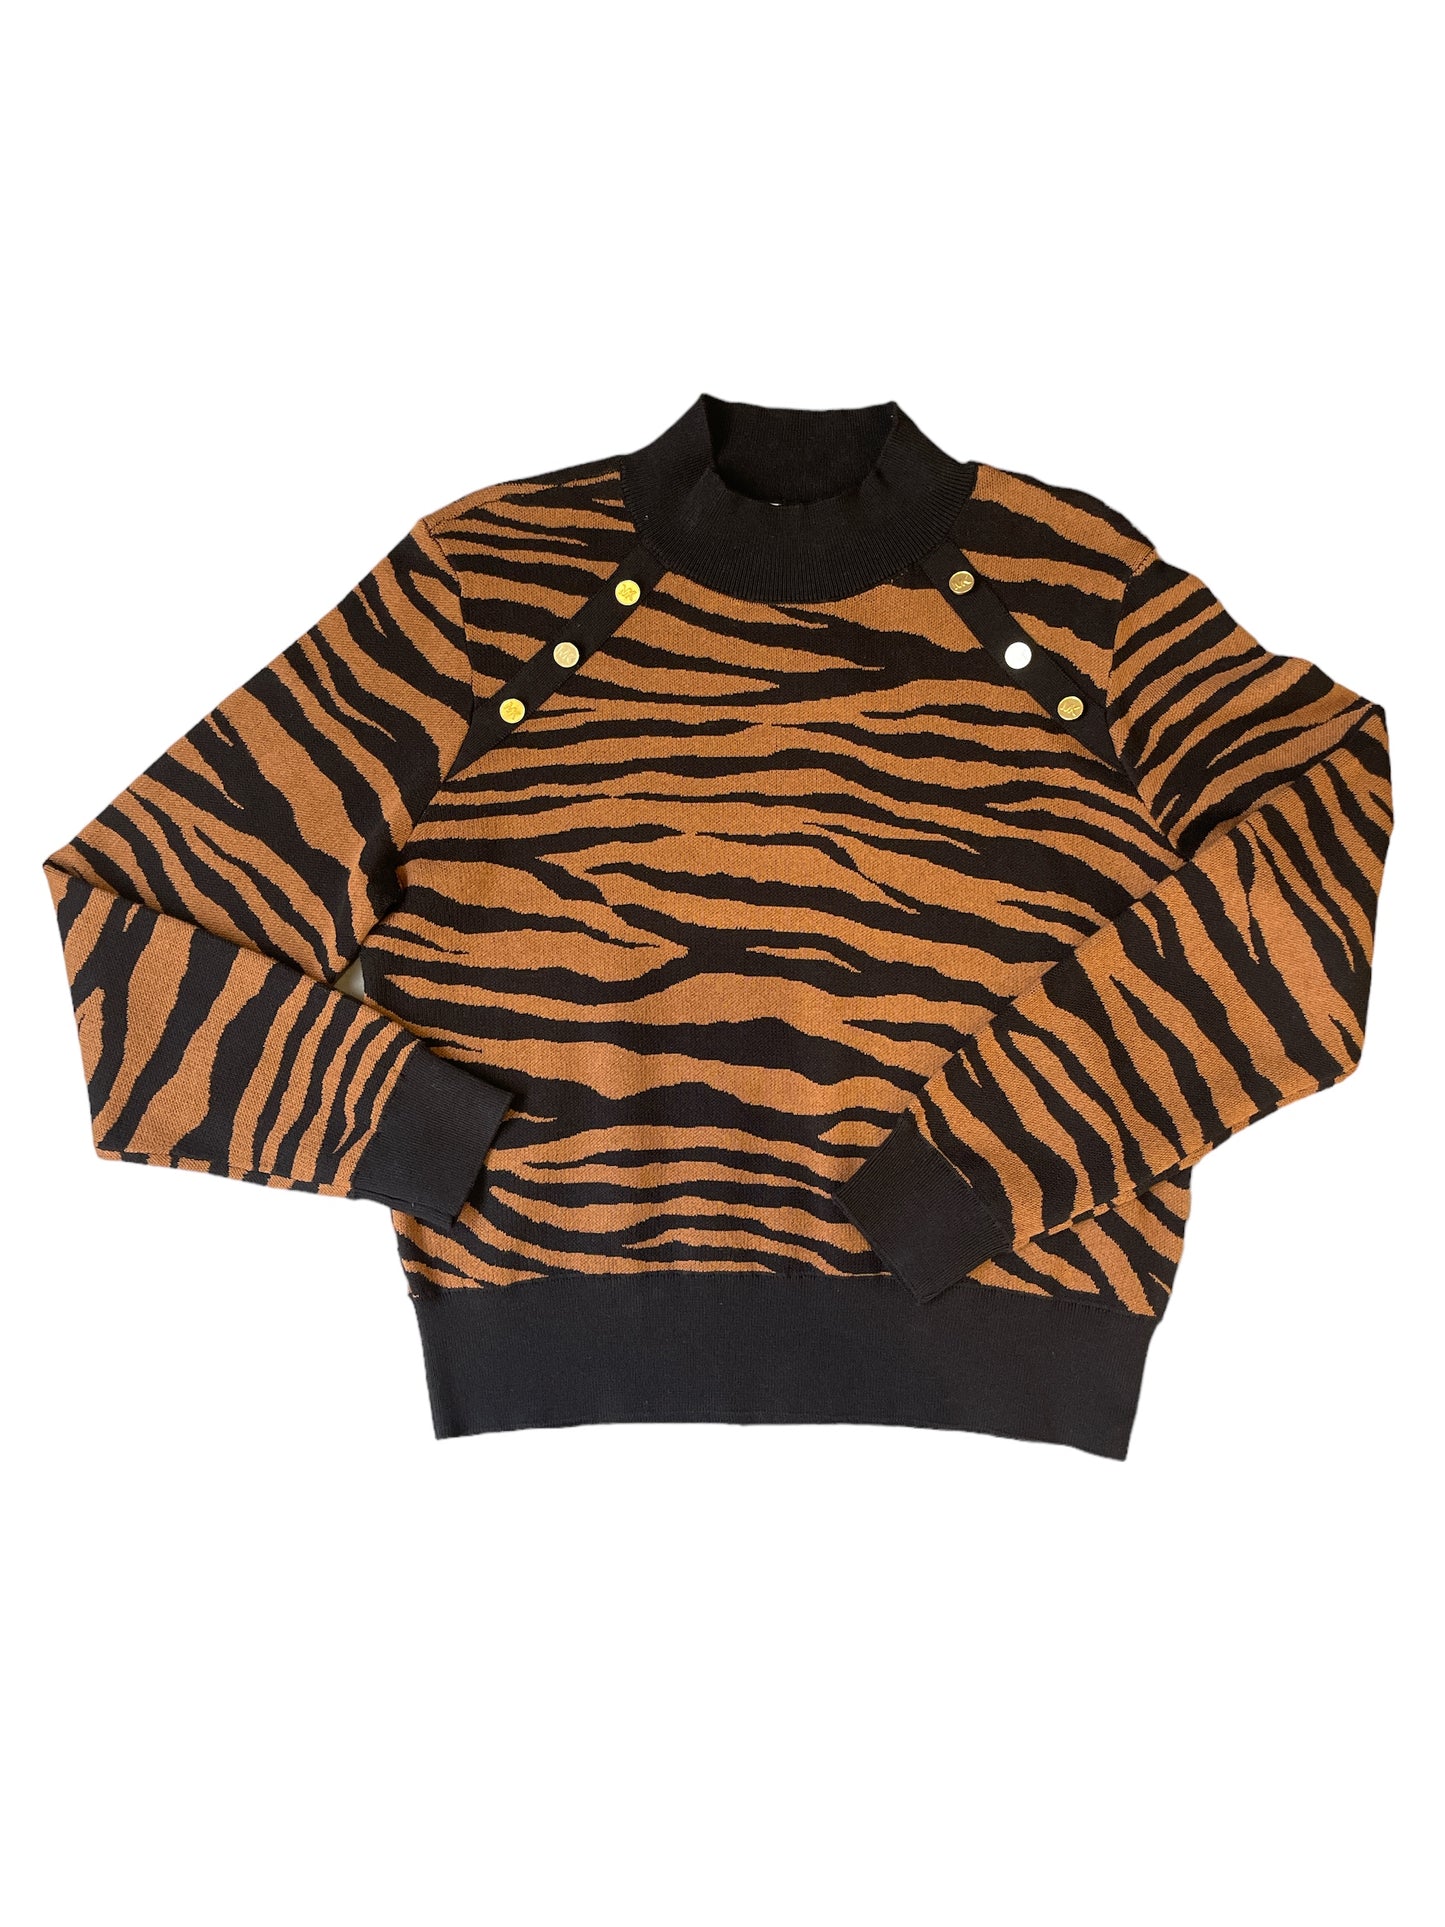 Michael kors Brown Zebra Print Long Sleeve Knit Top Size LG